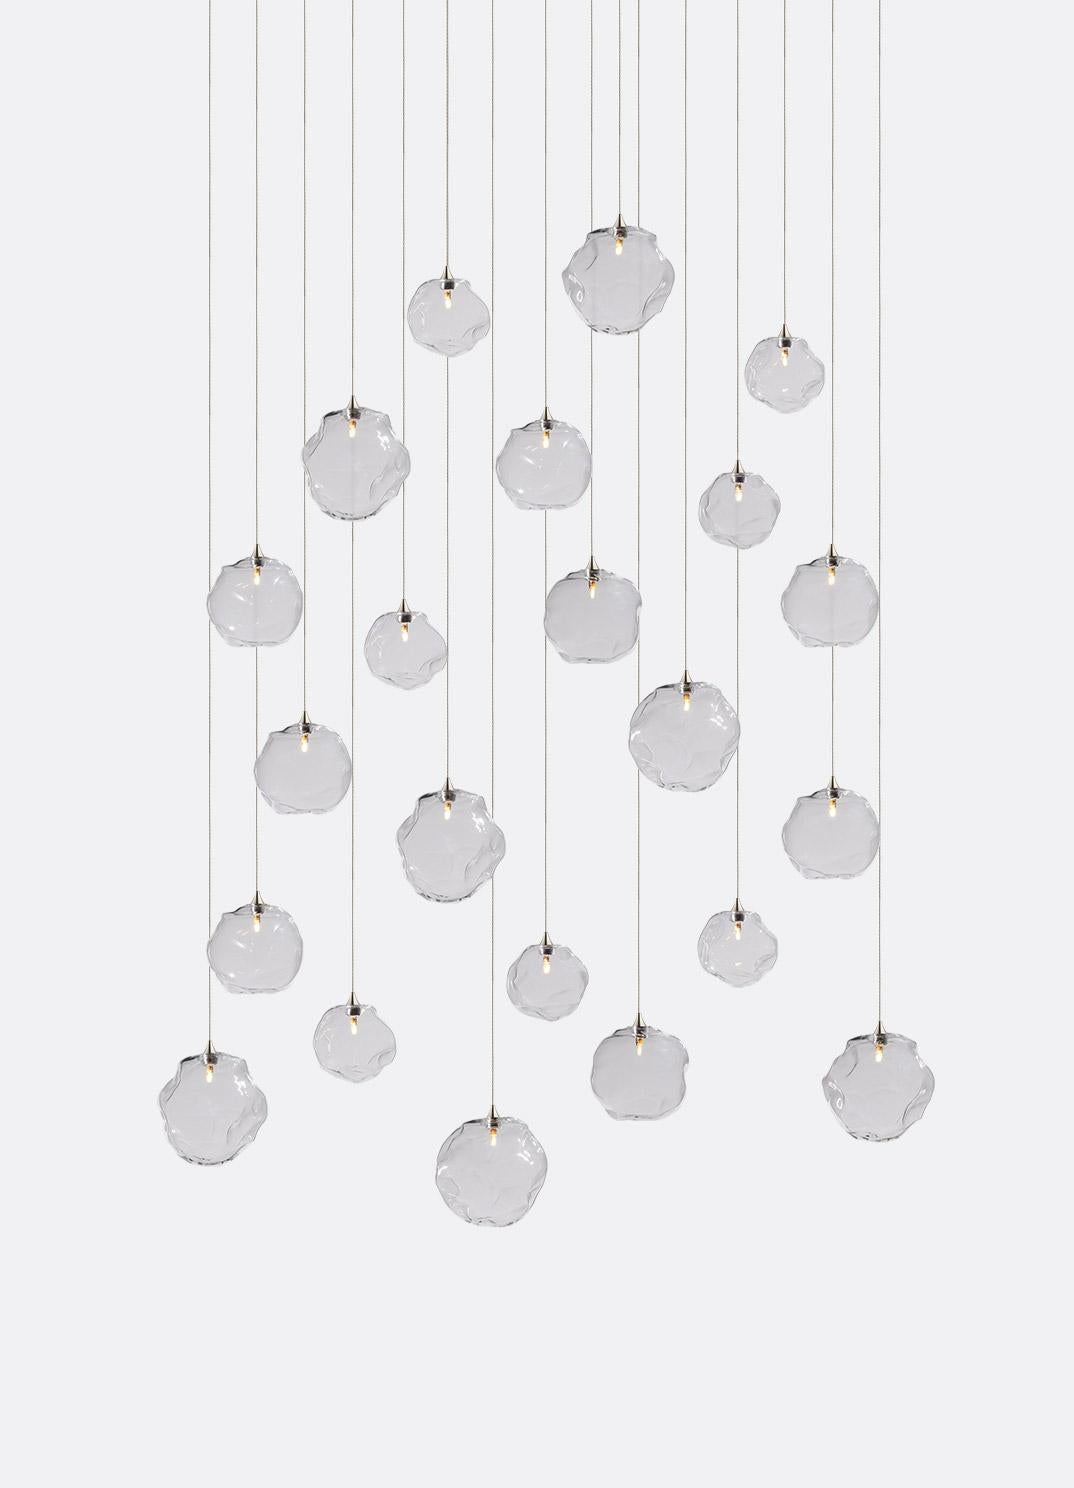 Hand blown glass pendants fixtures. 22 glass pendants on 18